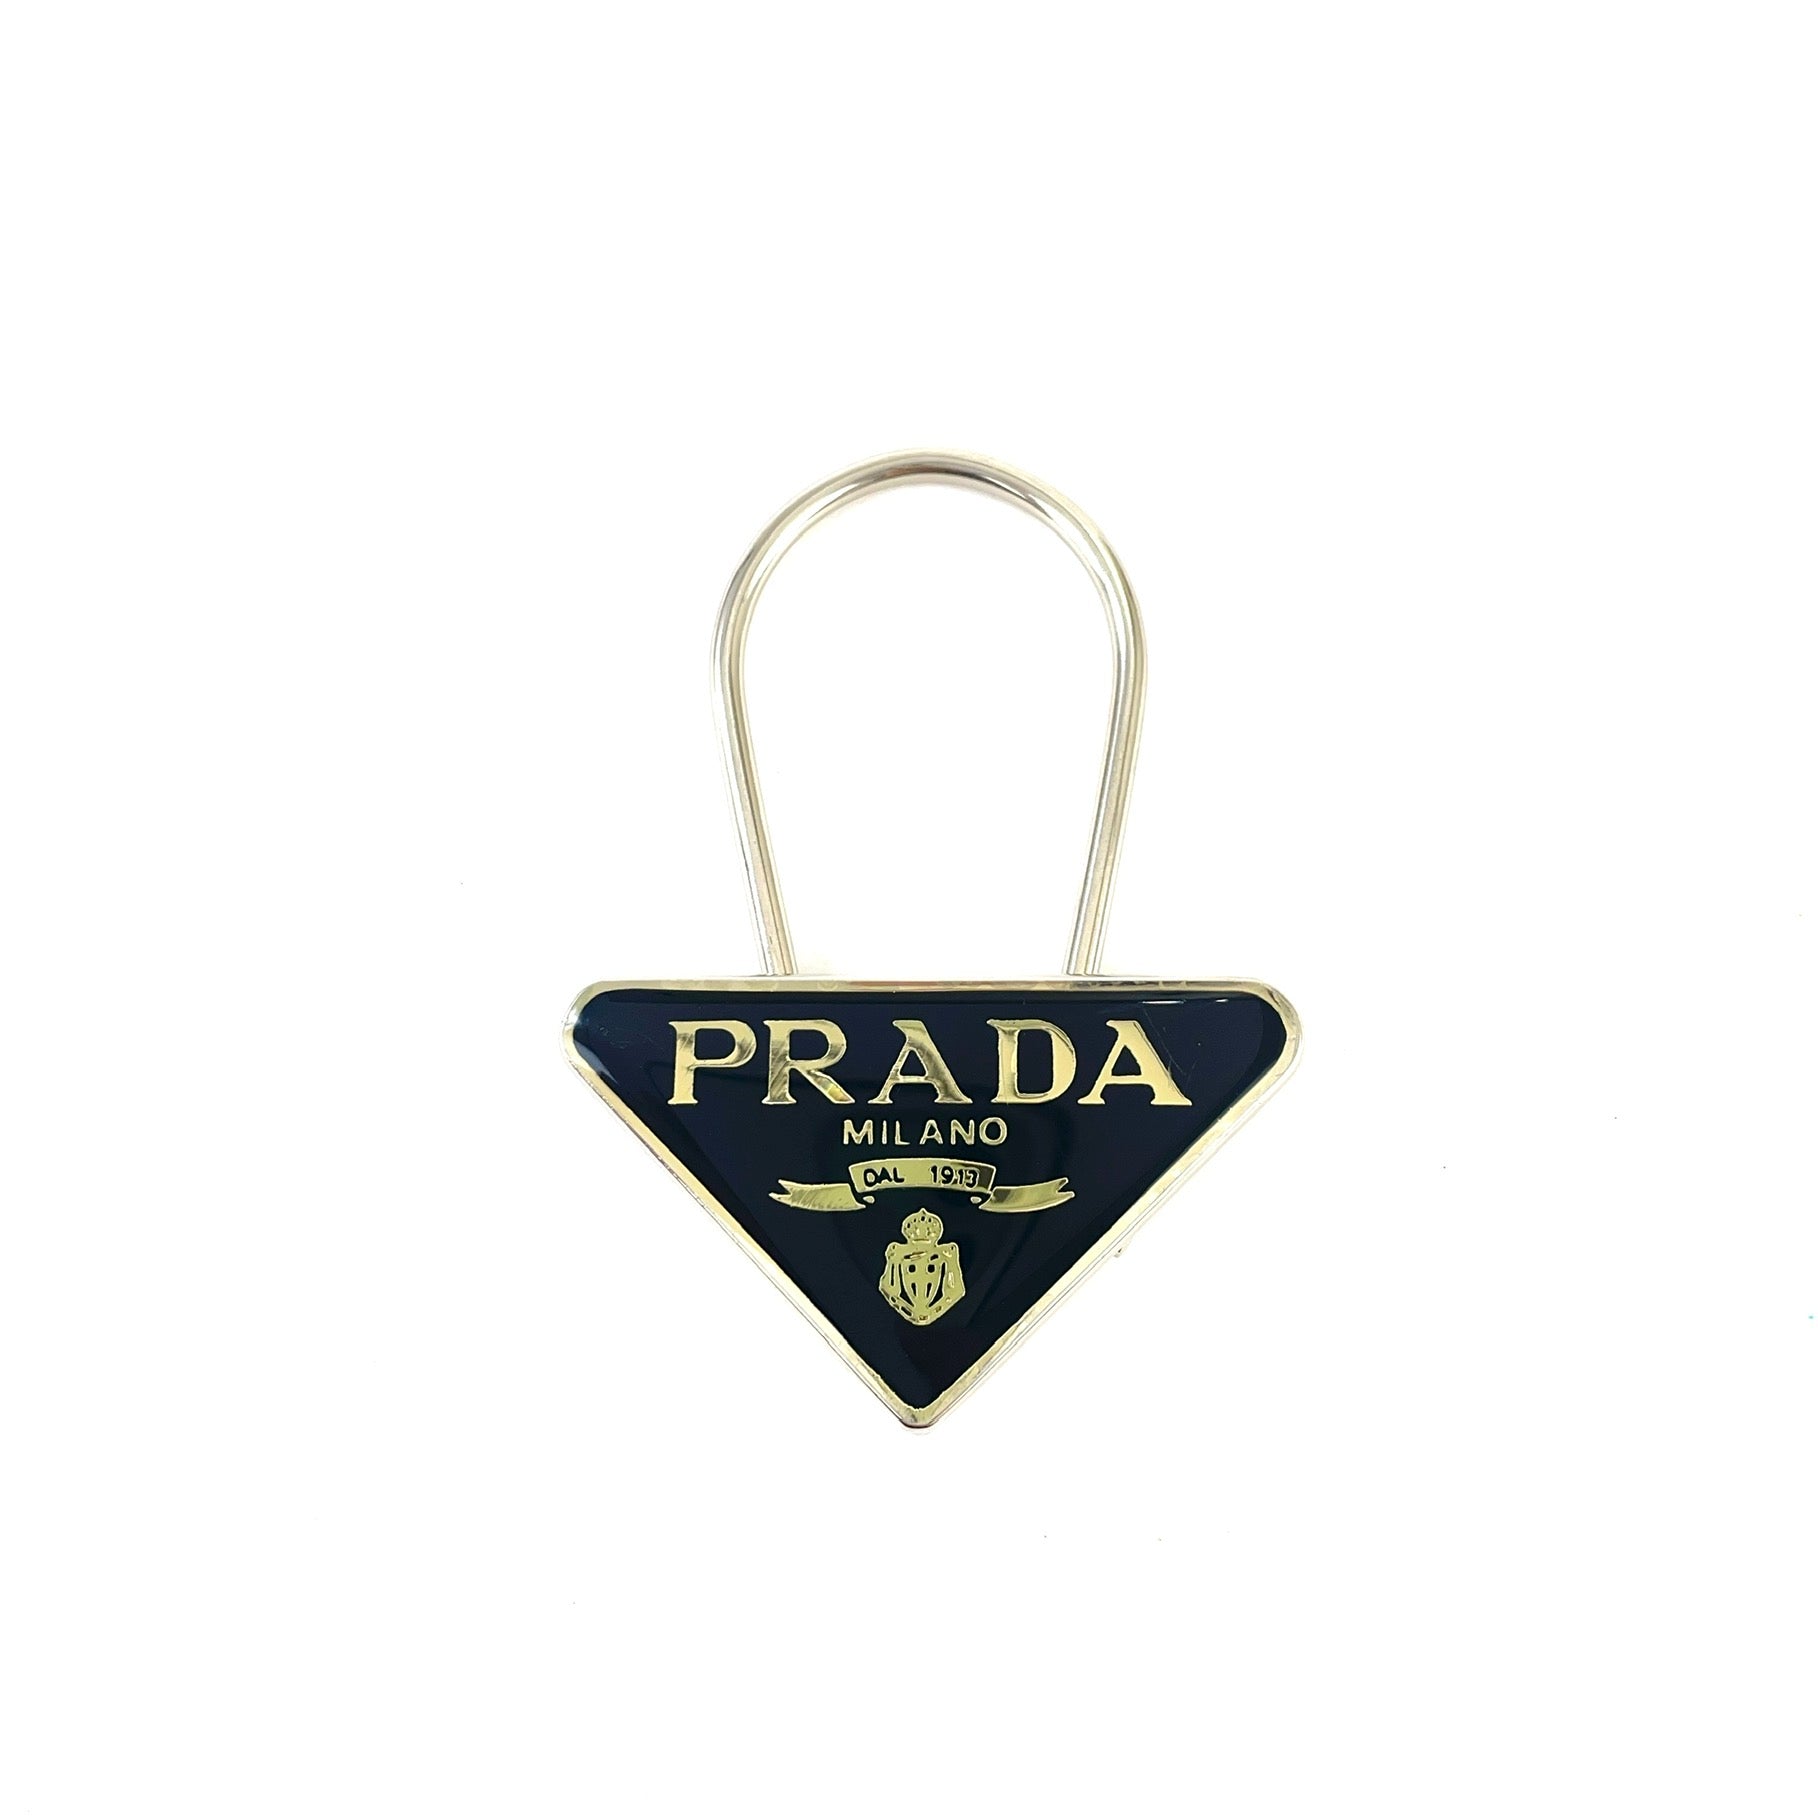 Triangle Modern Art - Black Gold Keychain - accessories accessory